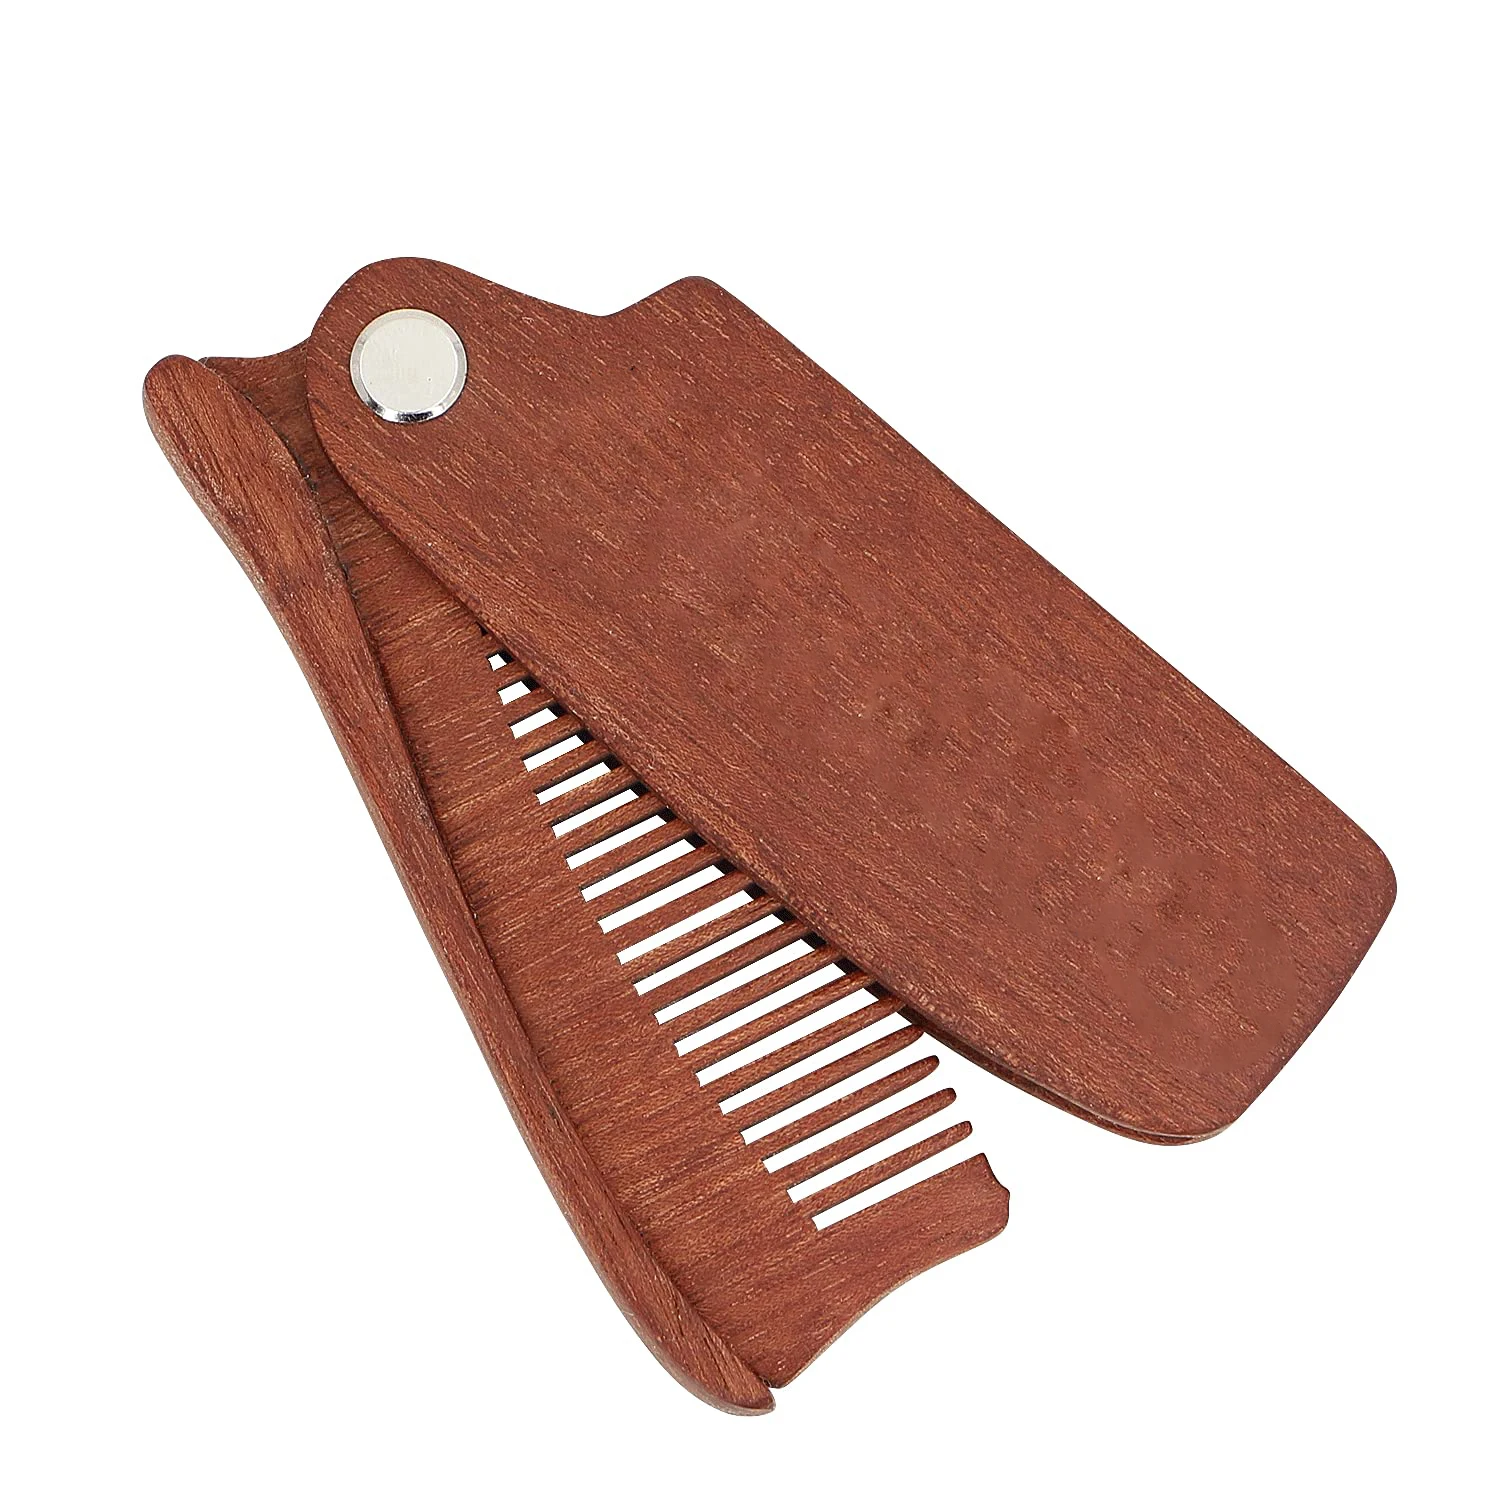 

Wooden fold sandalwood beard comb pocket comb, Natural wood color